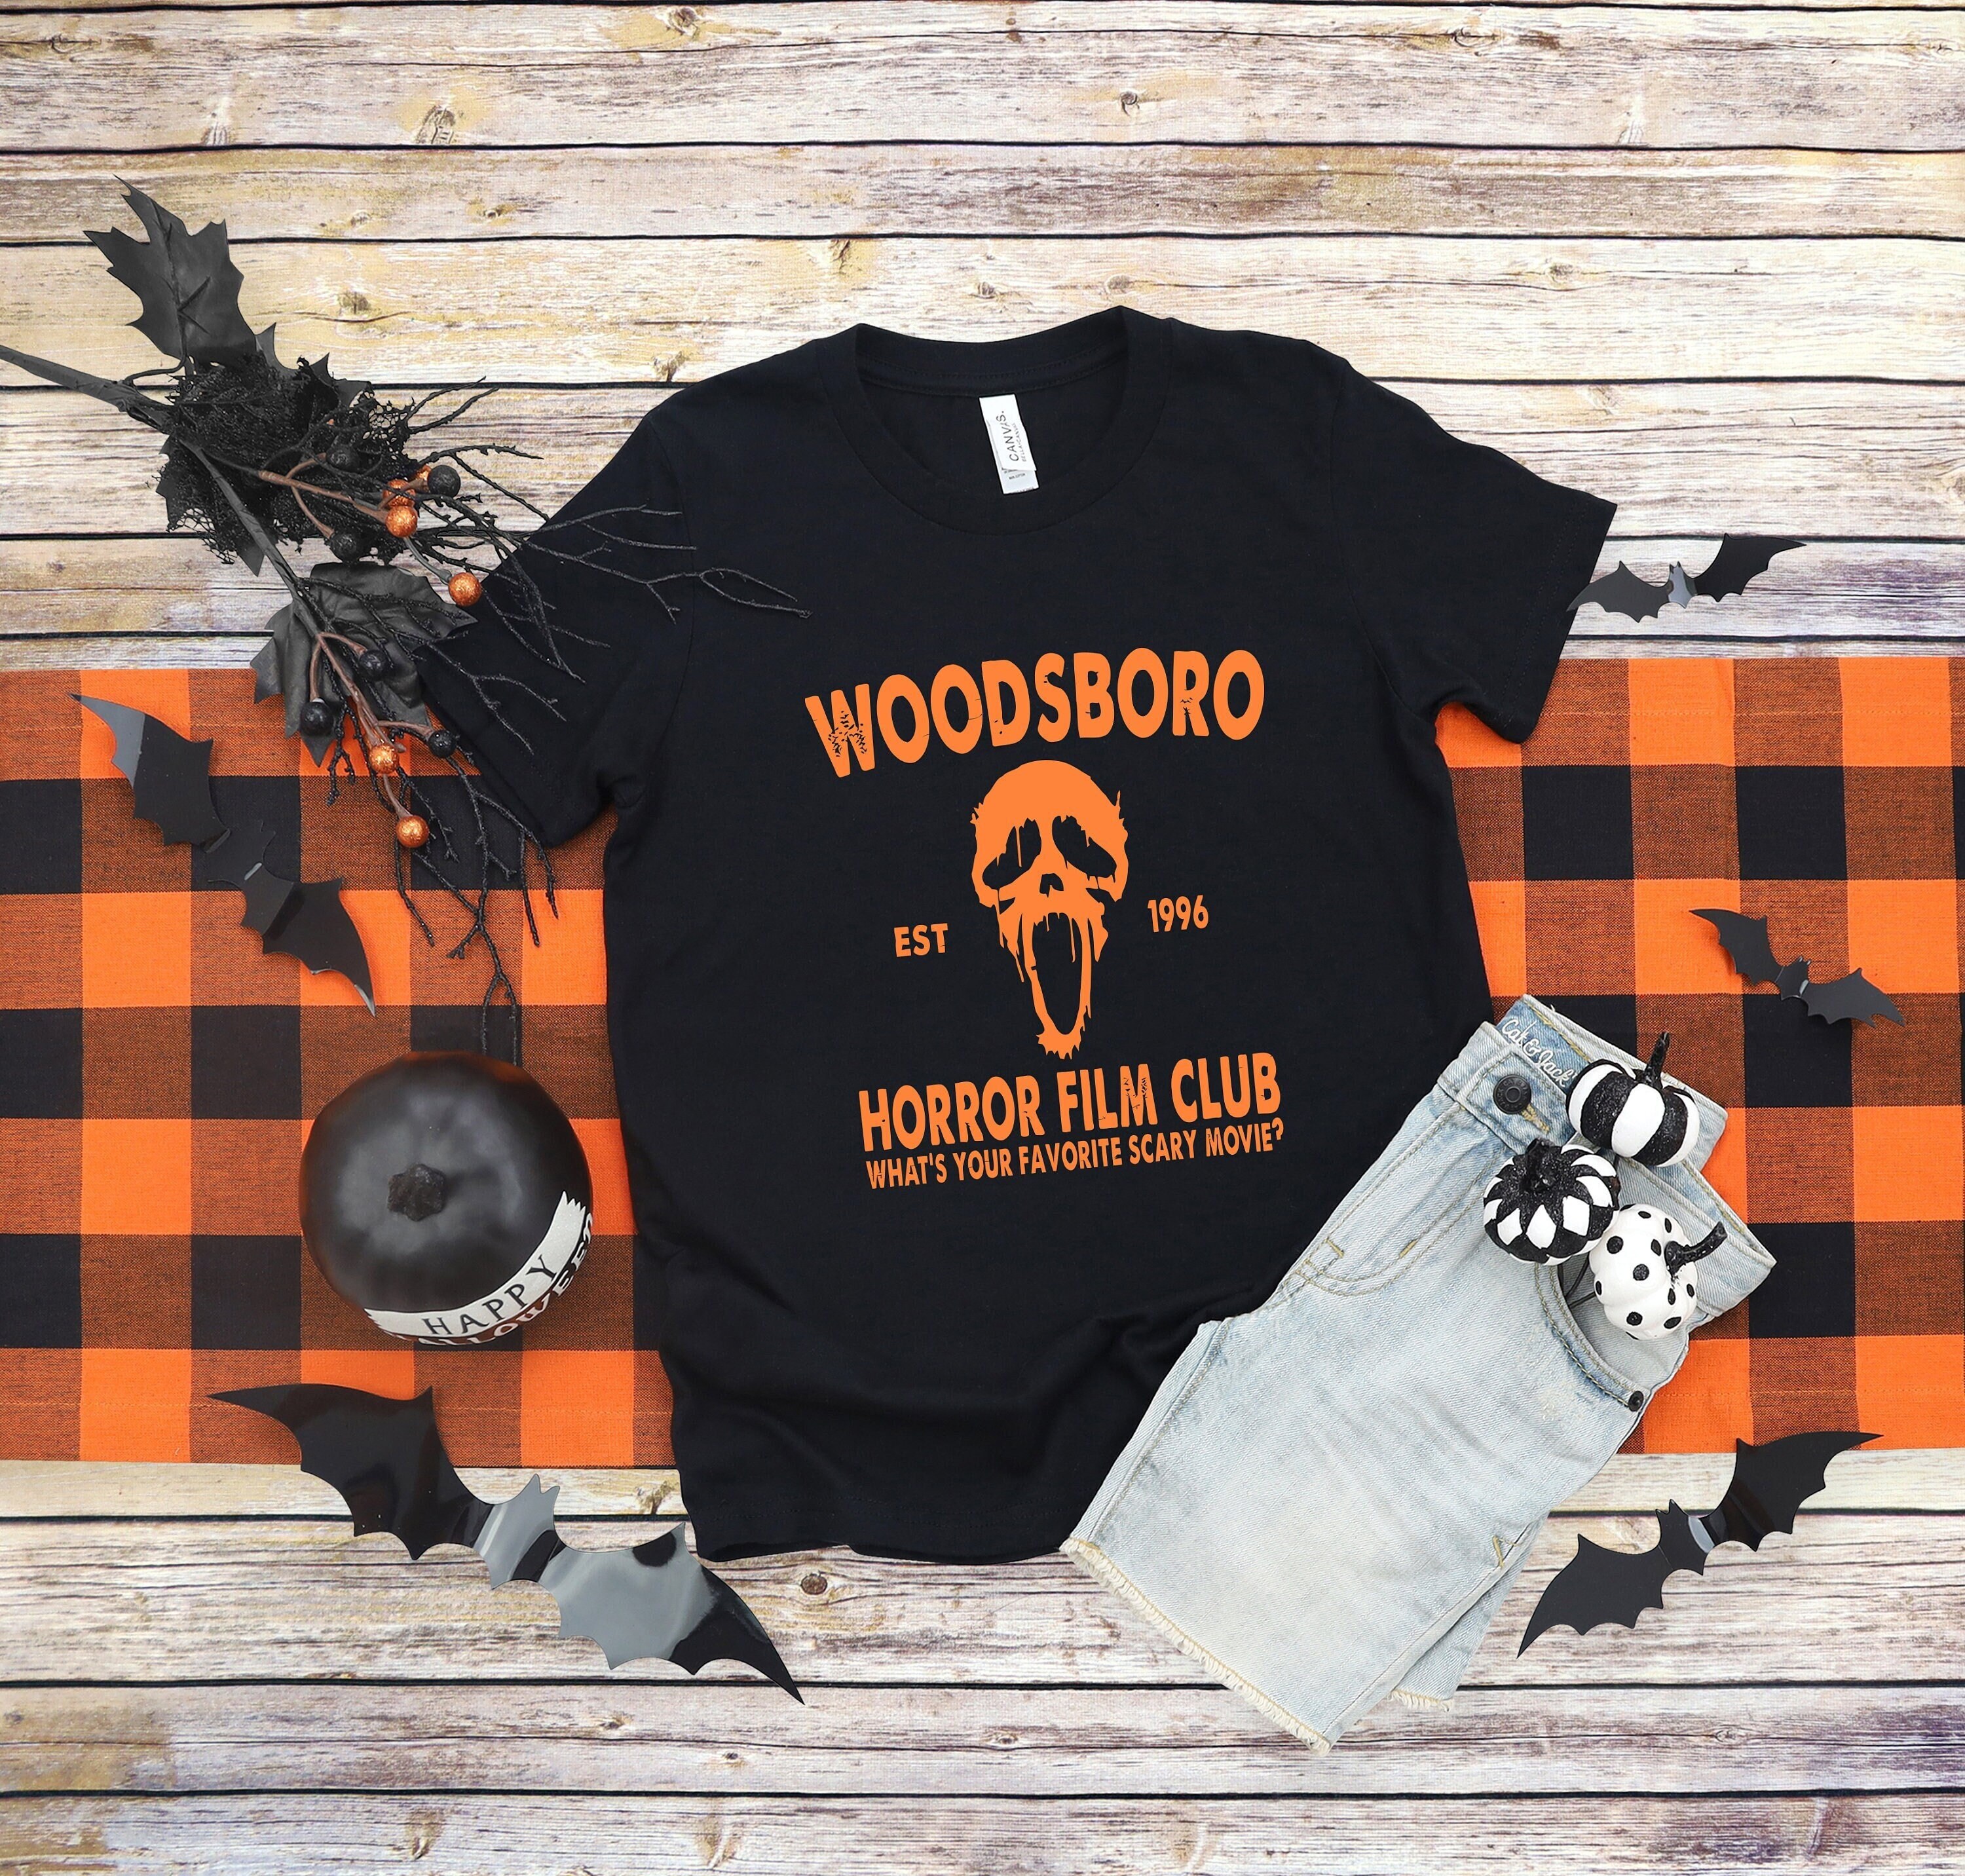 Woodsboro T-Shirt Horror Halloween Party 13 Friday Scream Loud Hostel Camp D292 